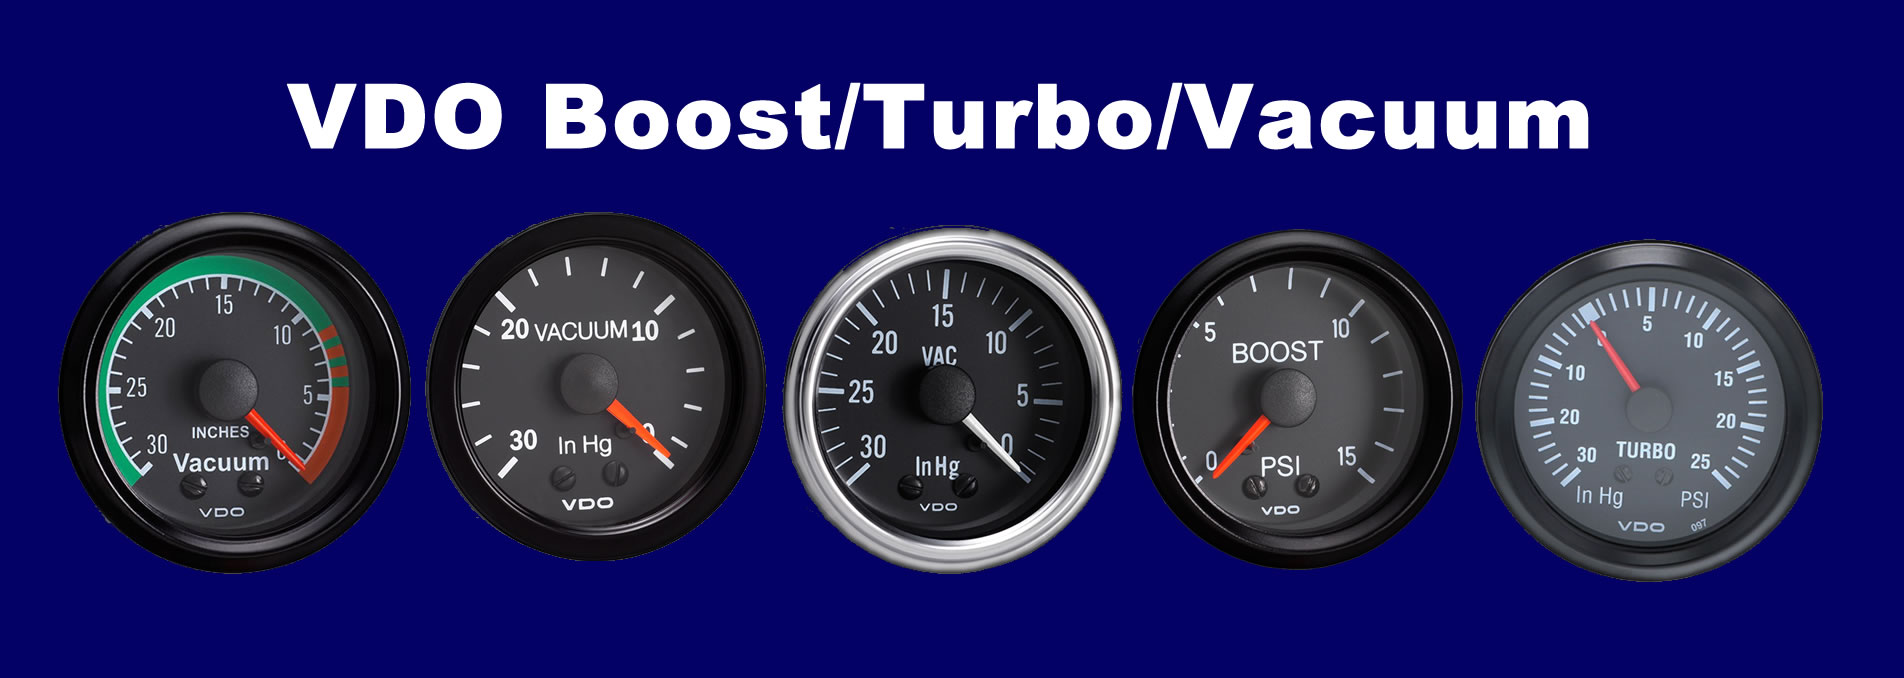 VDO-Boost-Turbo-Vacuum Gauges Banner